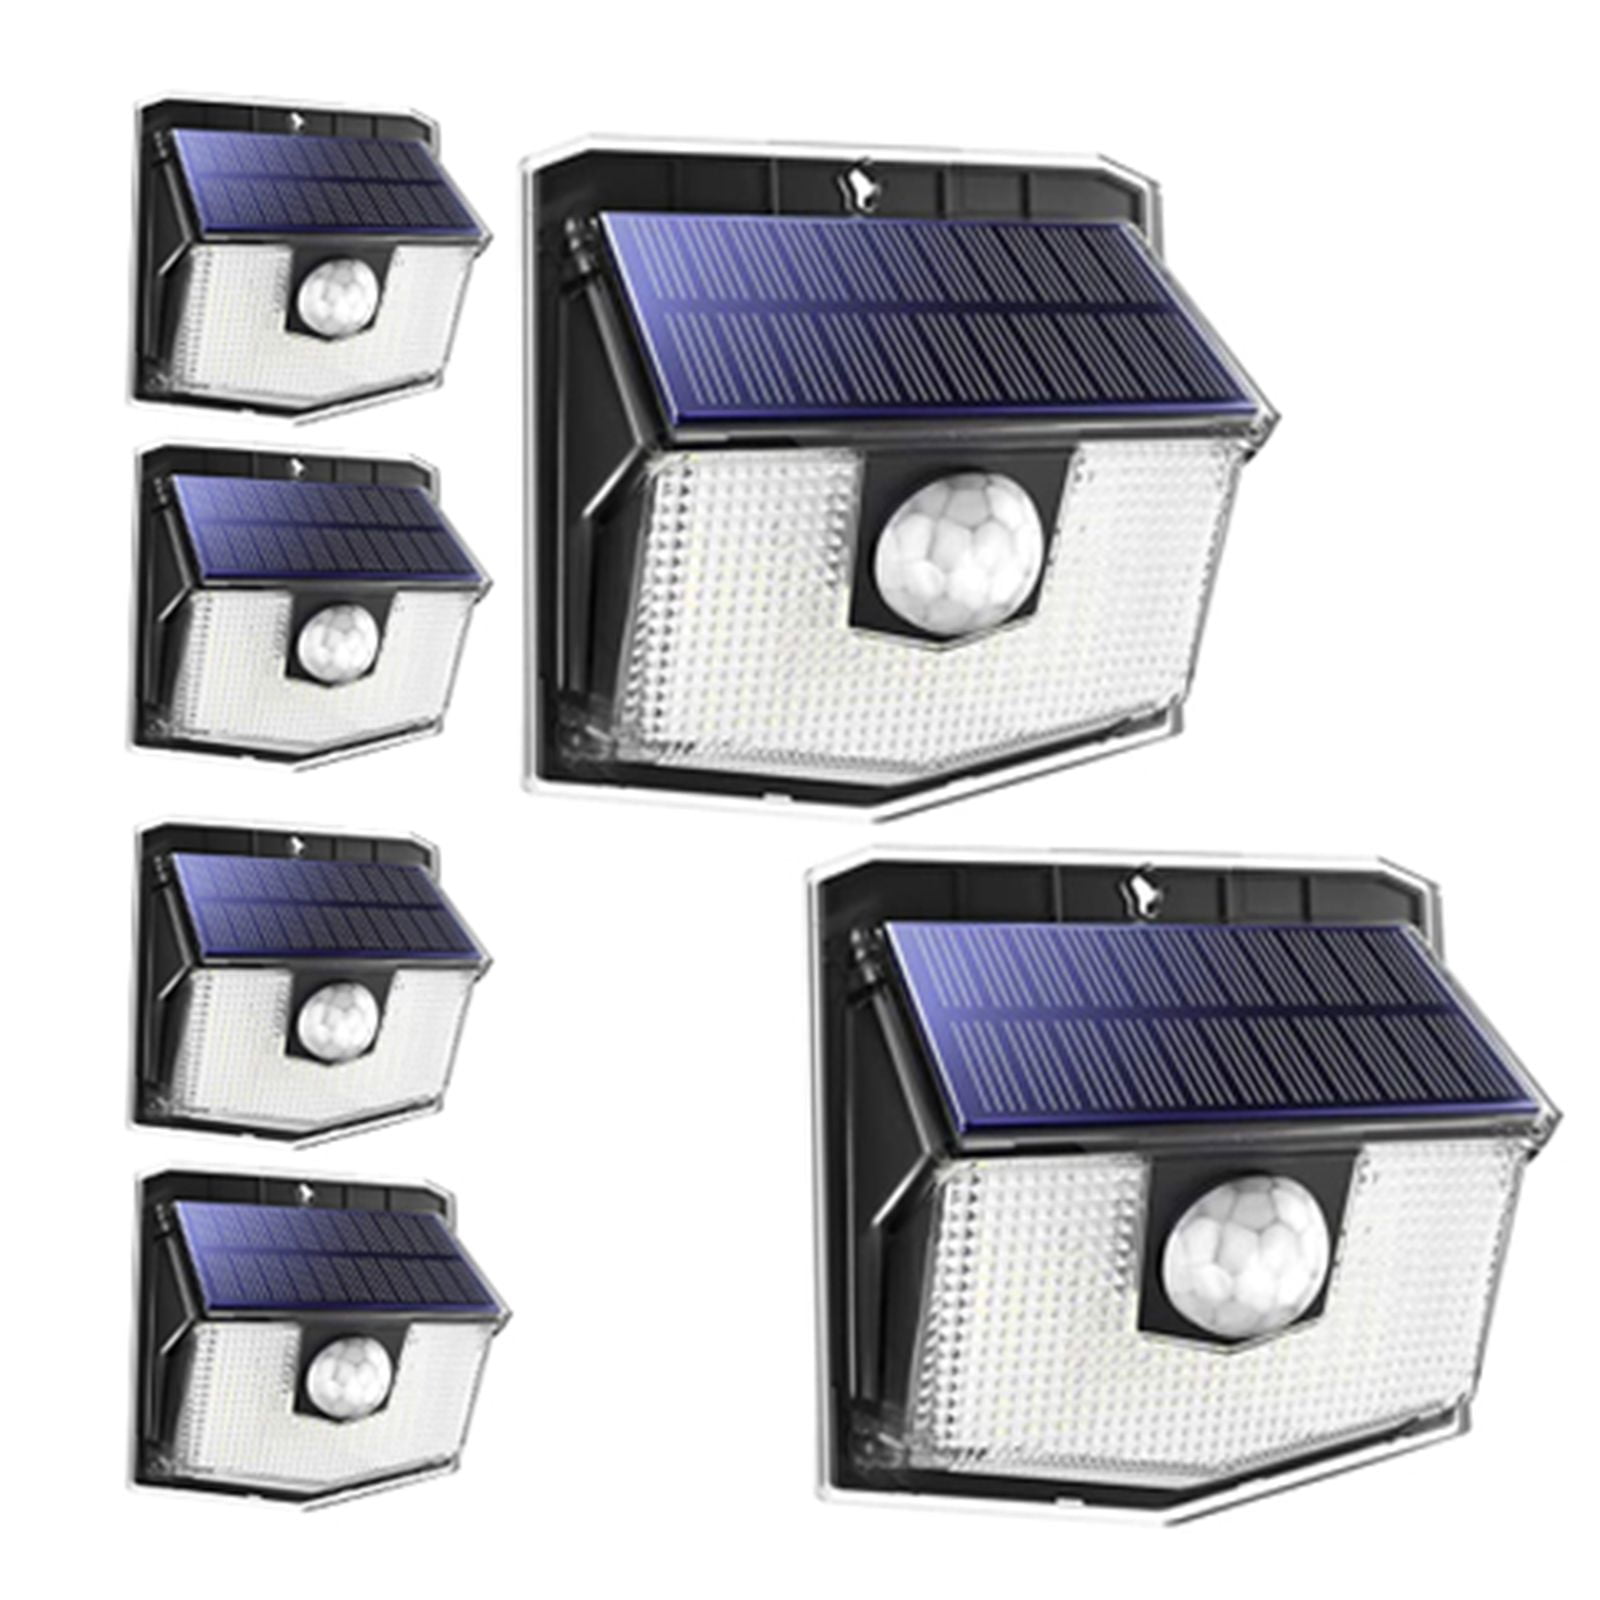 IP67 LITOM Premium Solar Lights Outdoor with 270°Wide Angle Illumination 4 Pack 